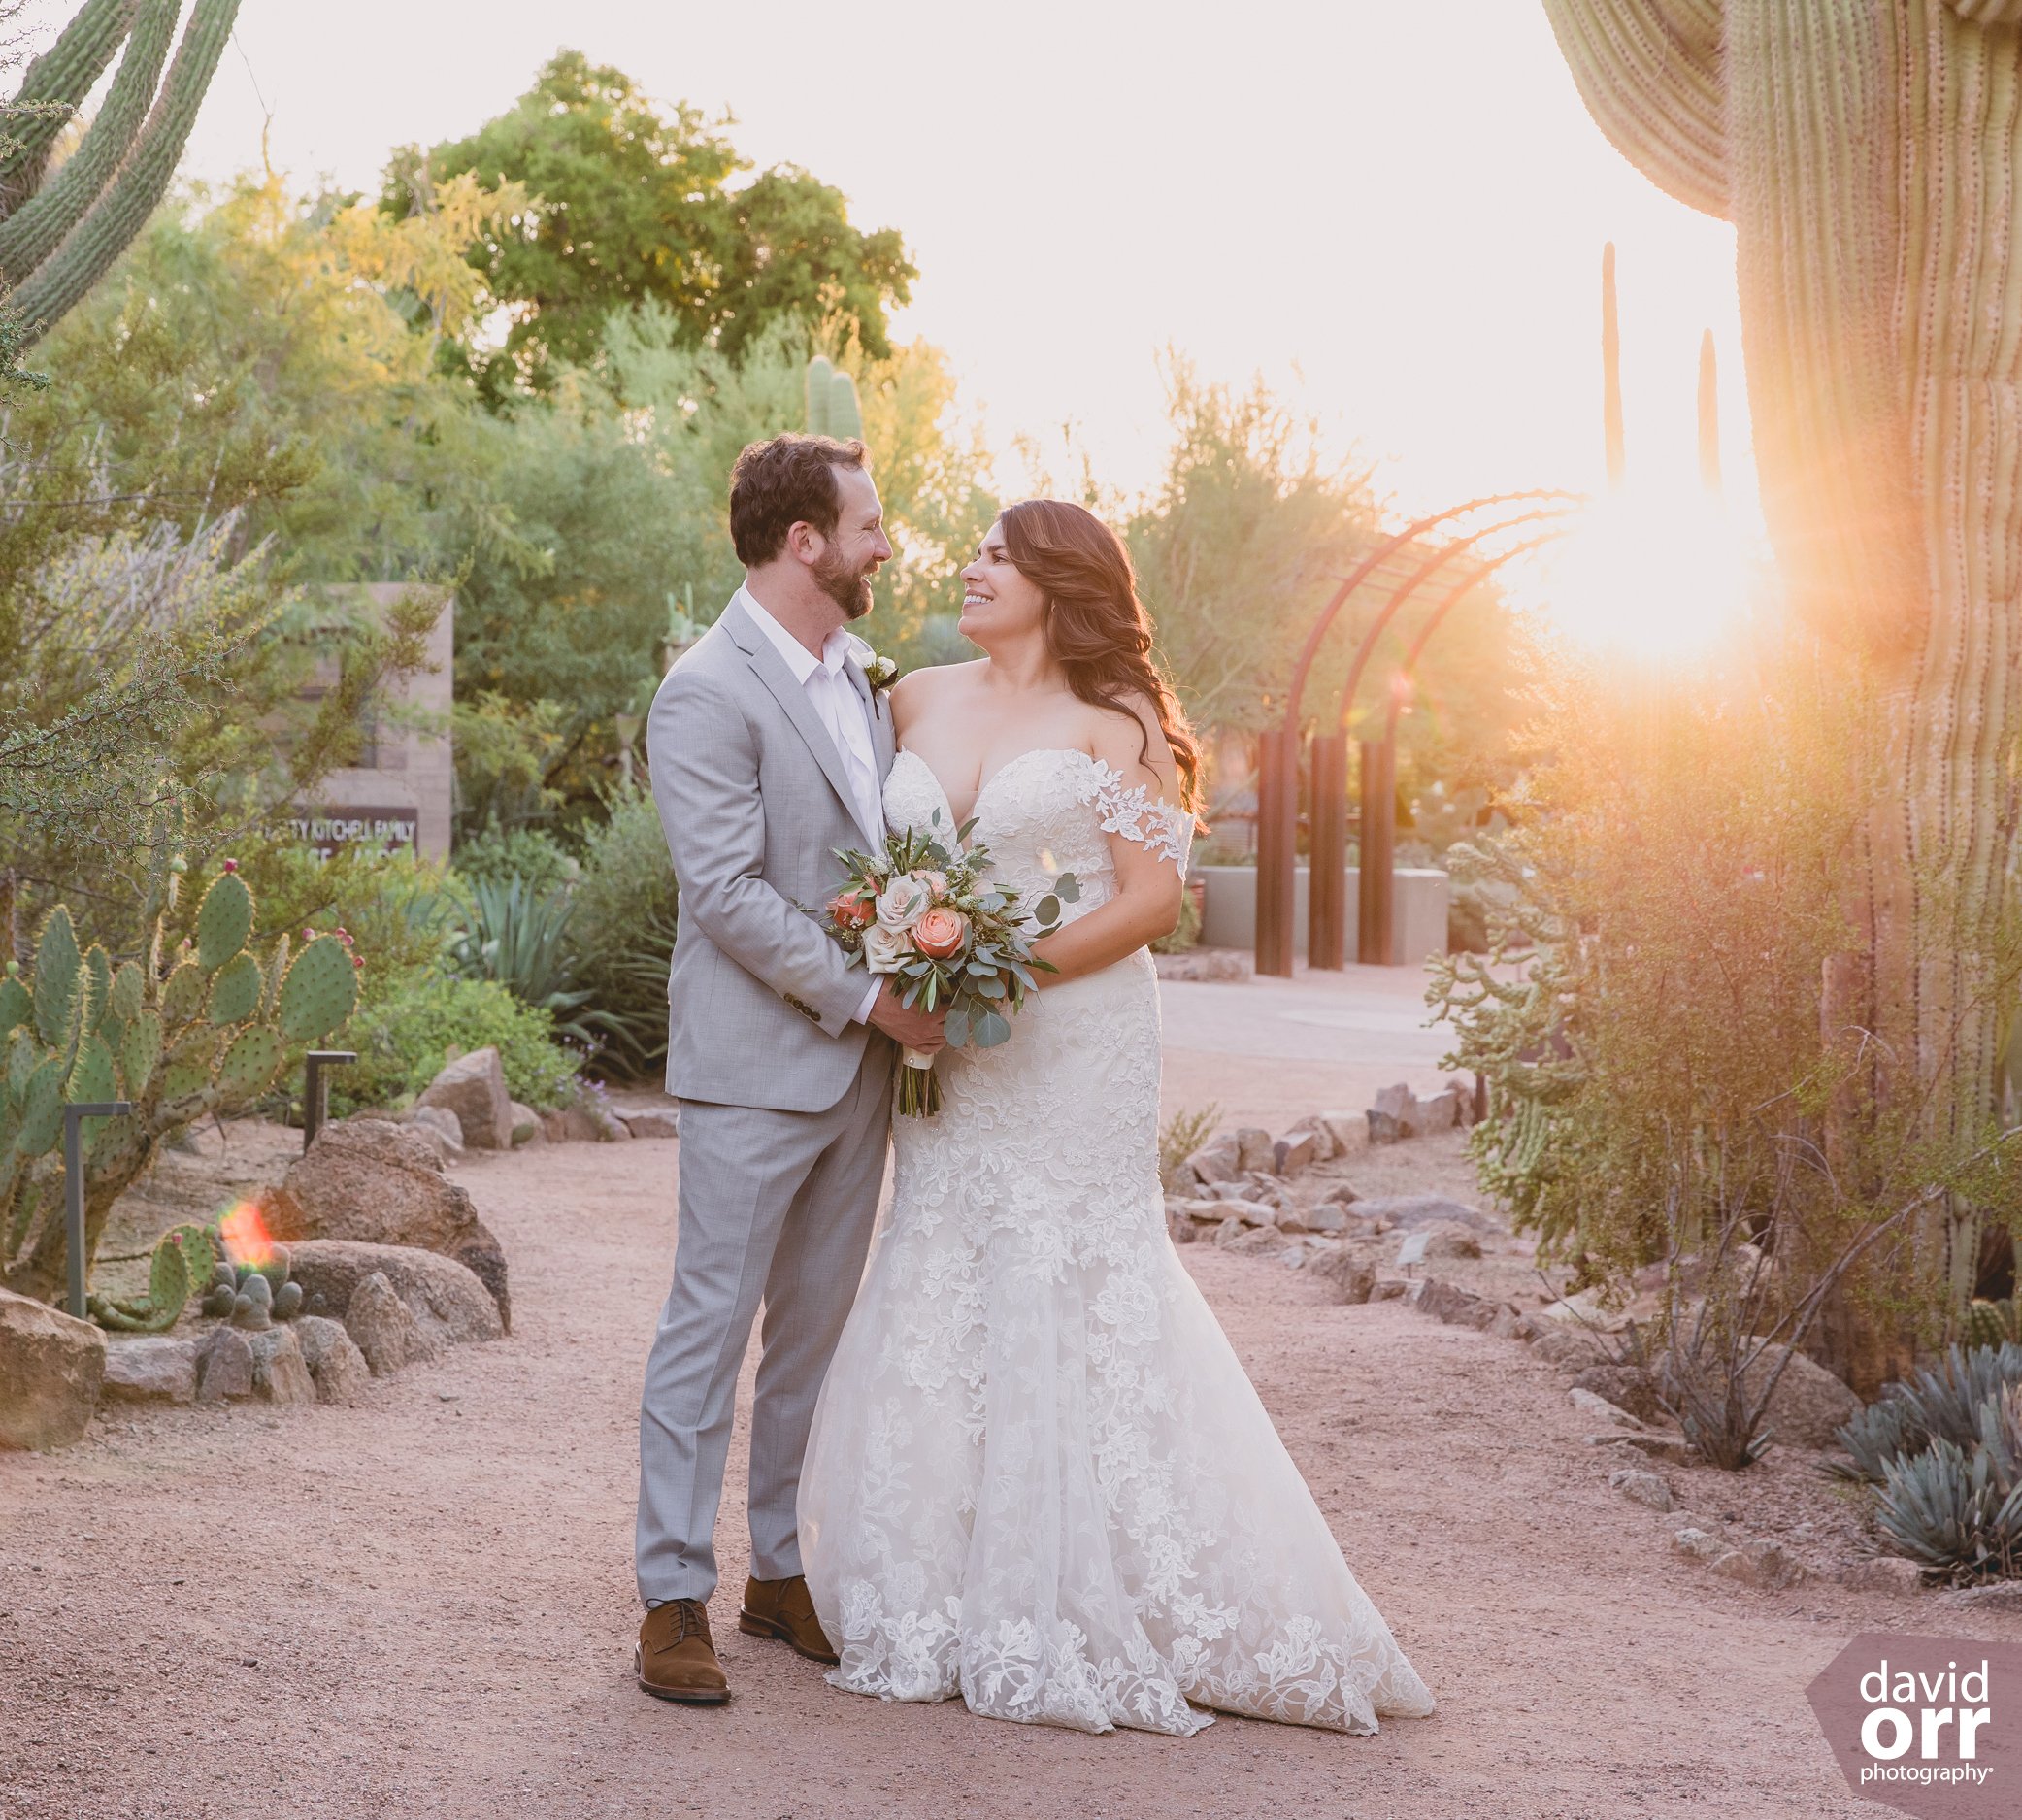 Sunset wedding portraits at Desert Botanical Garden